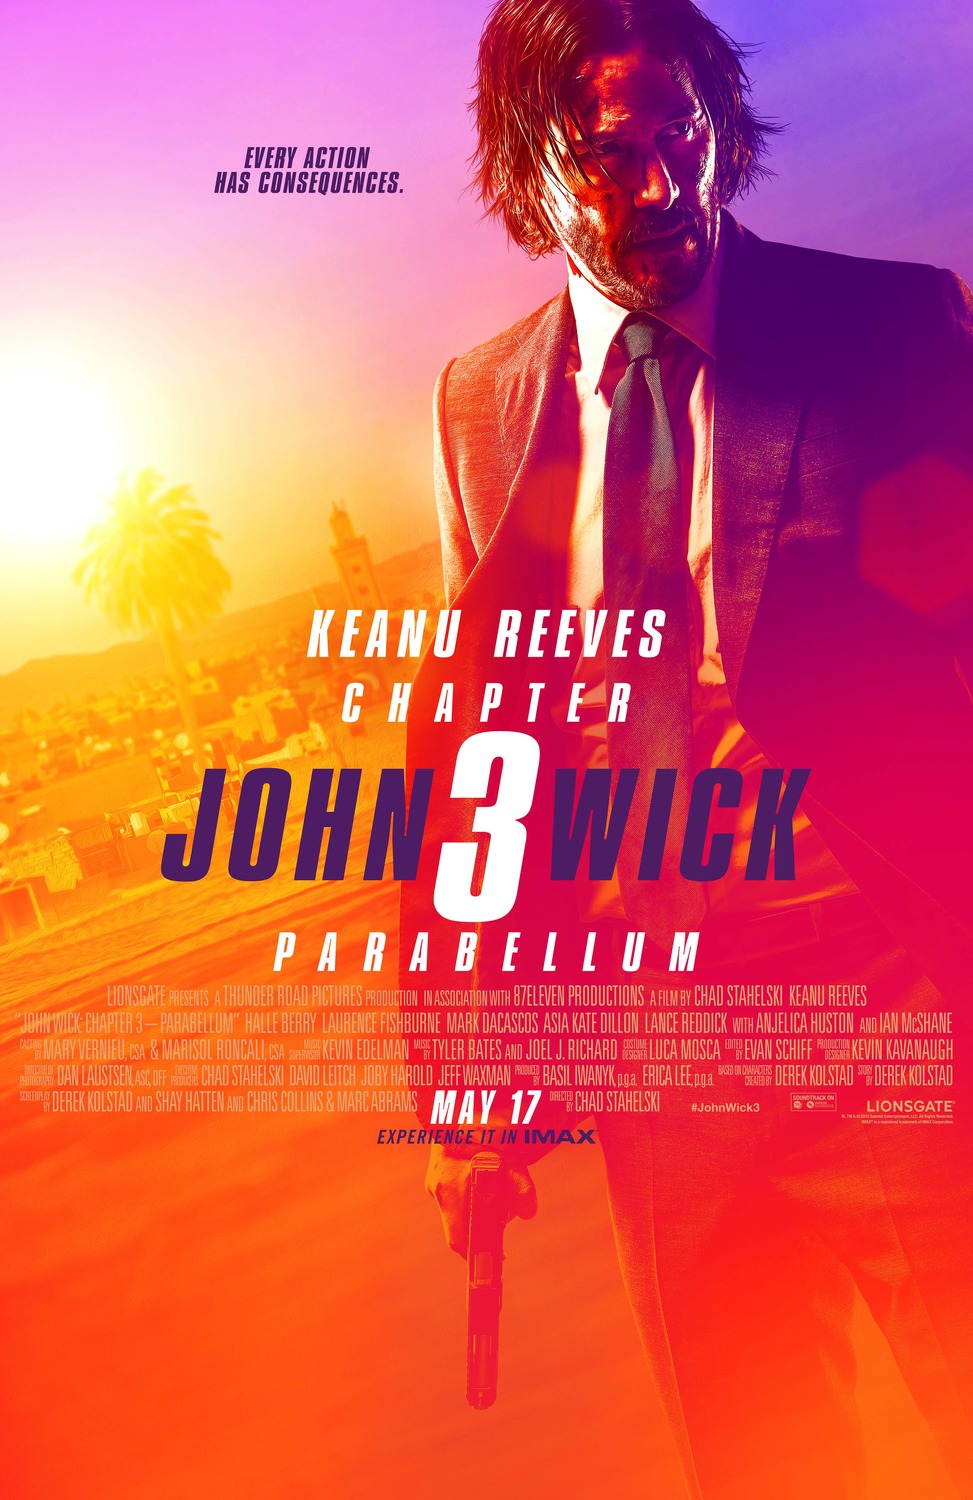 John Wick (2014) : Movie Plot Holes Explained